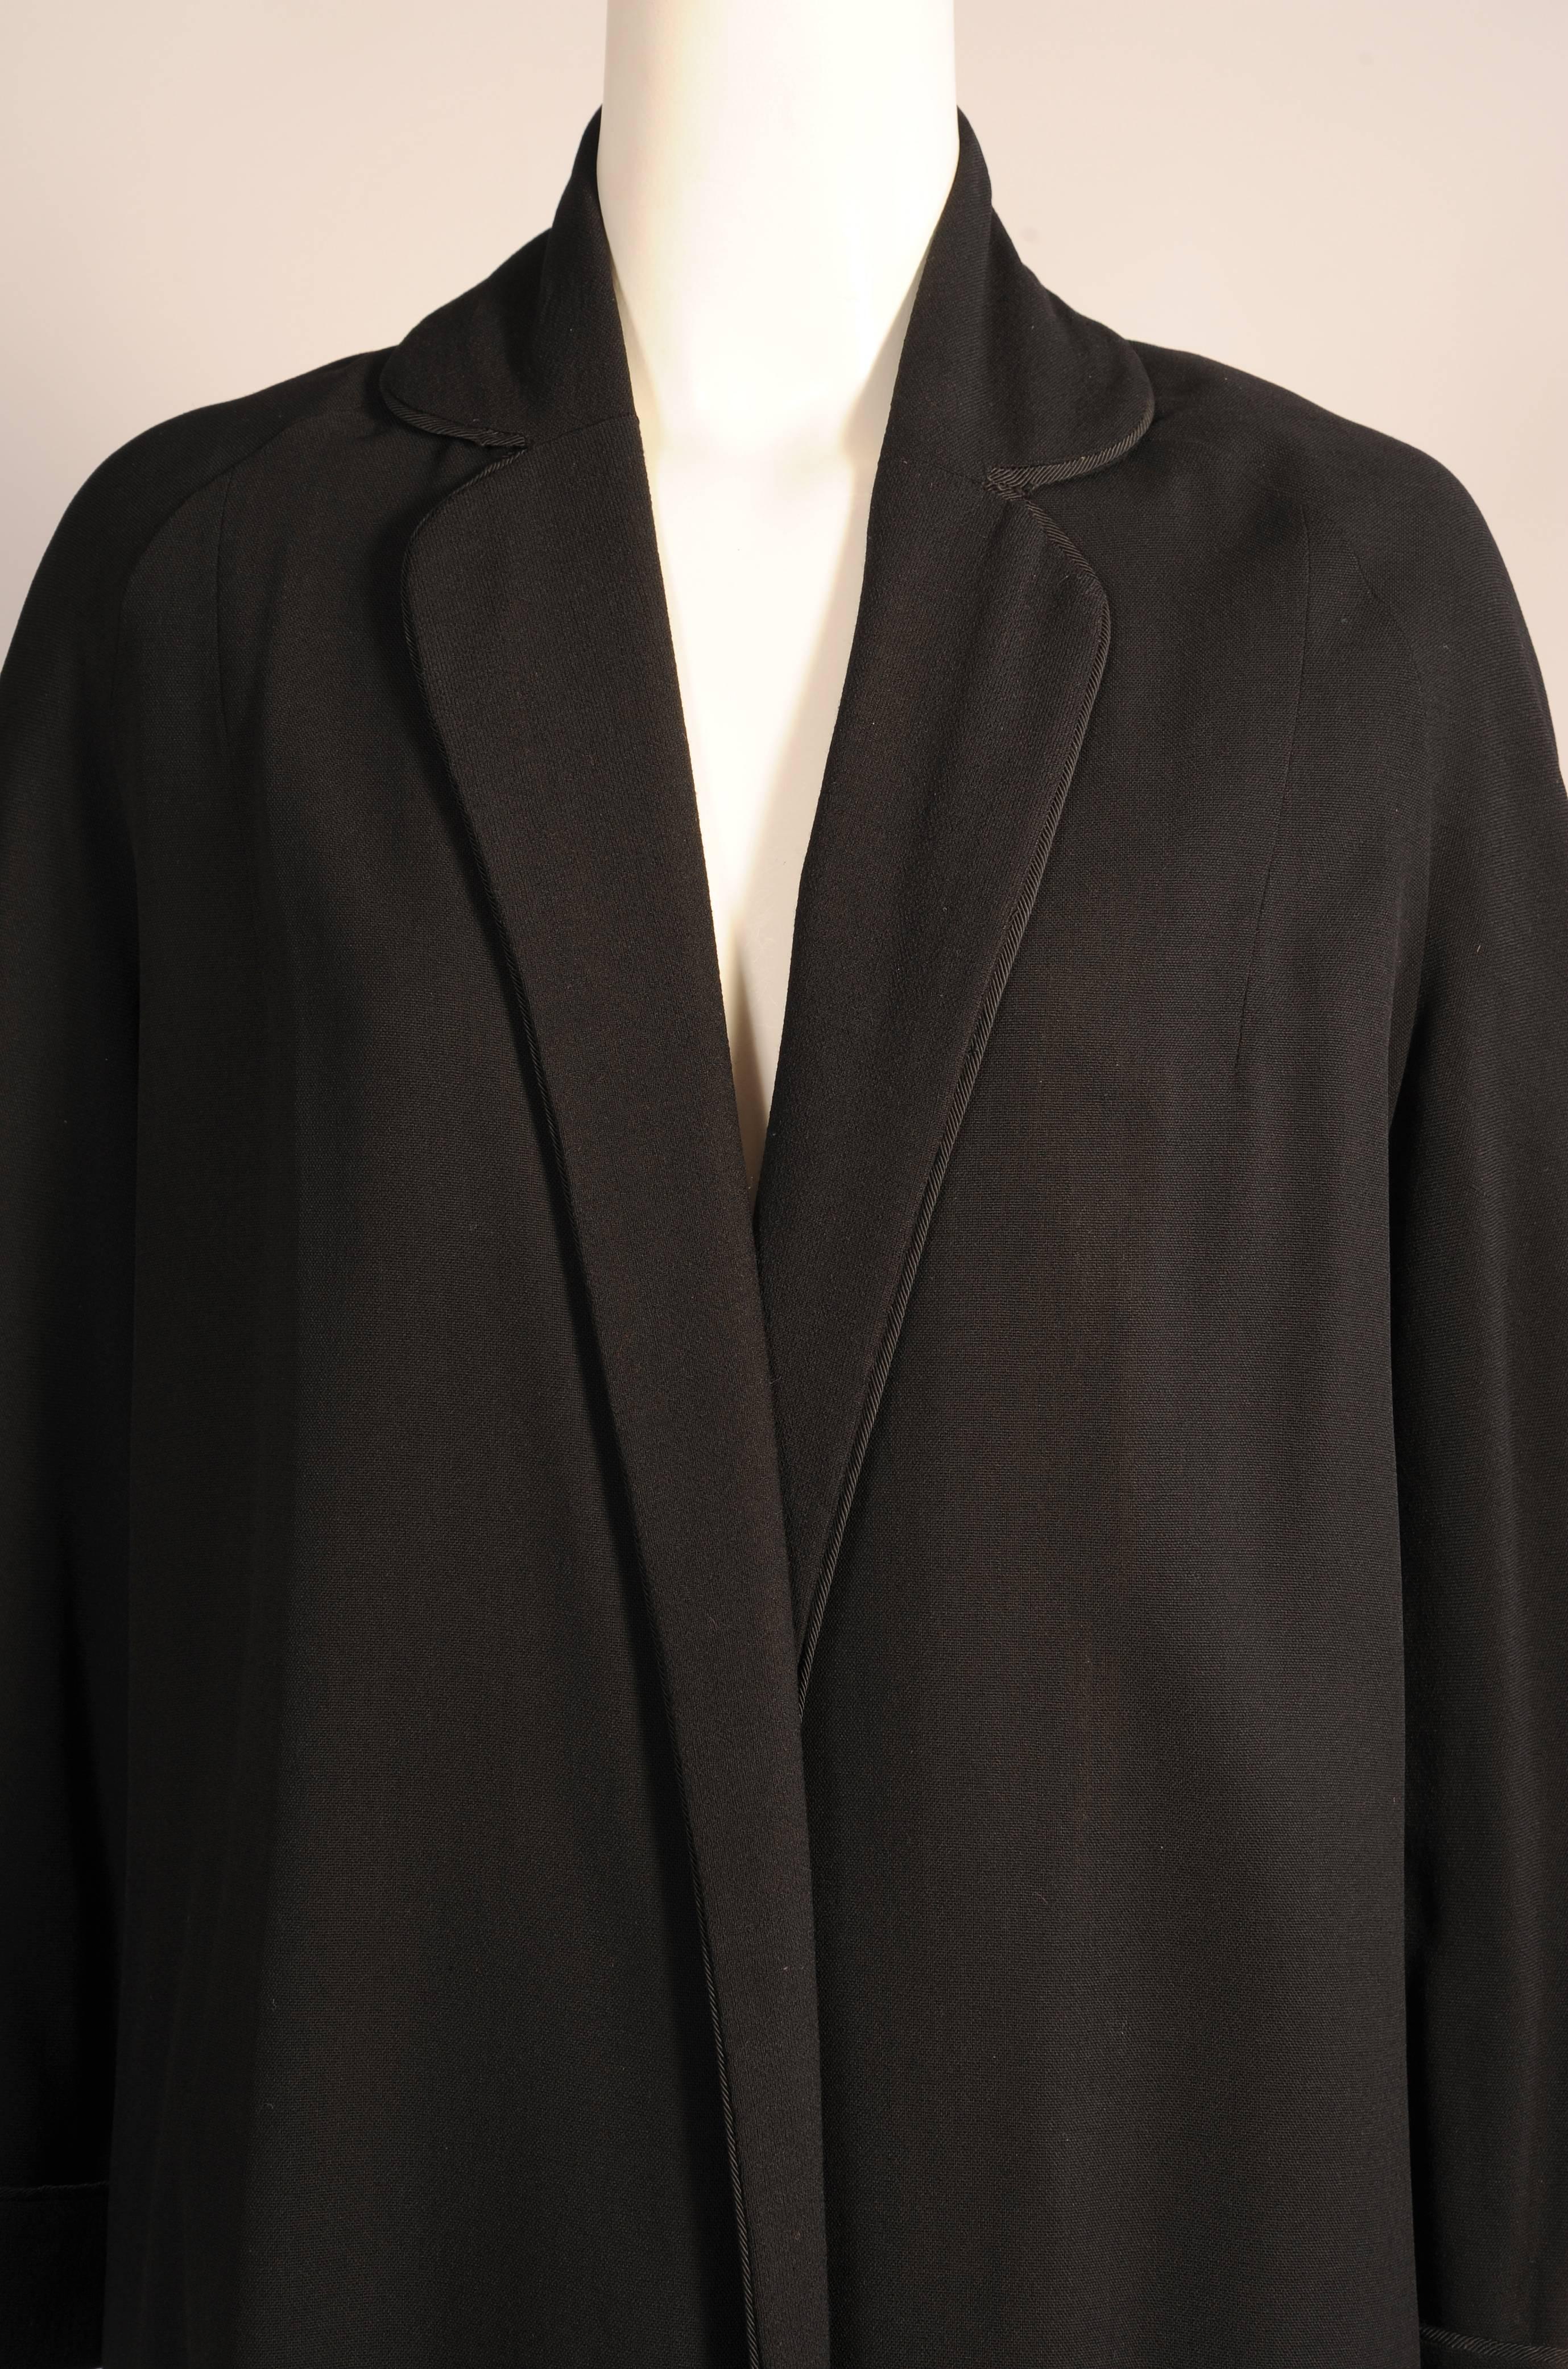 Pierre Balmain Numbered Haute Couture Black Wool Coat, 1950s  2